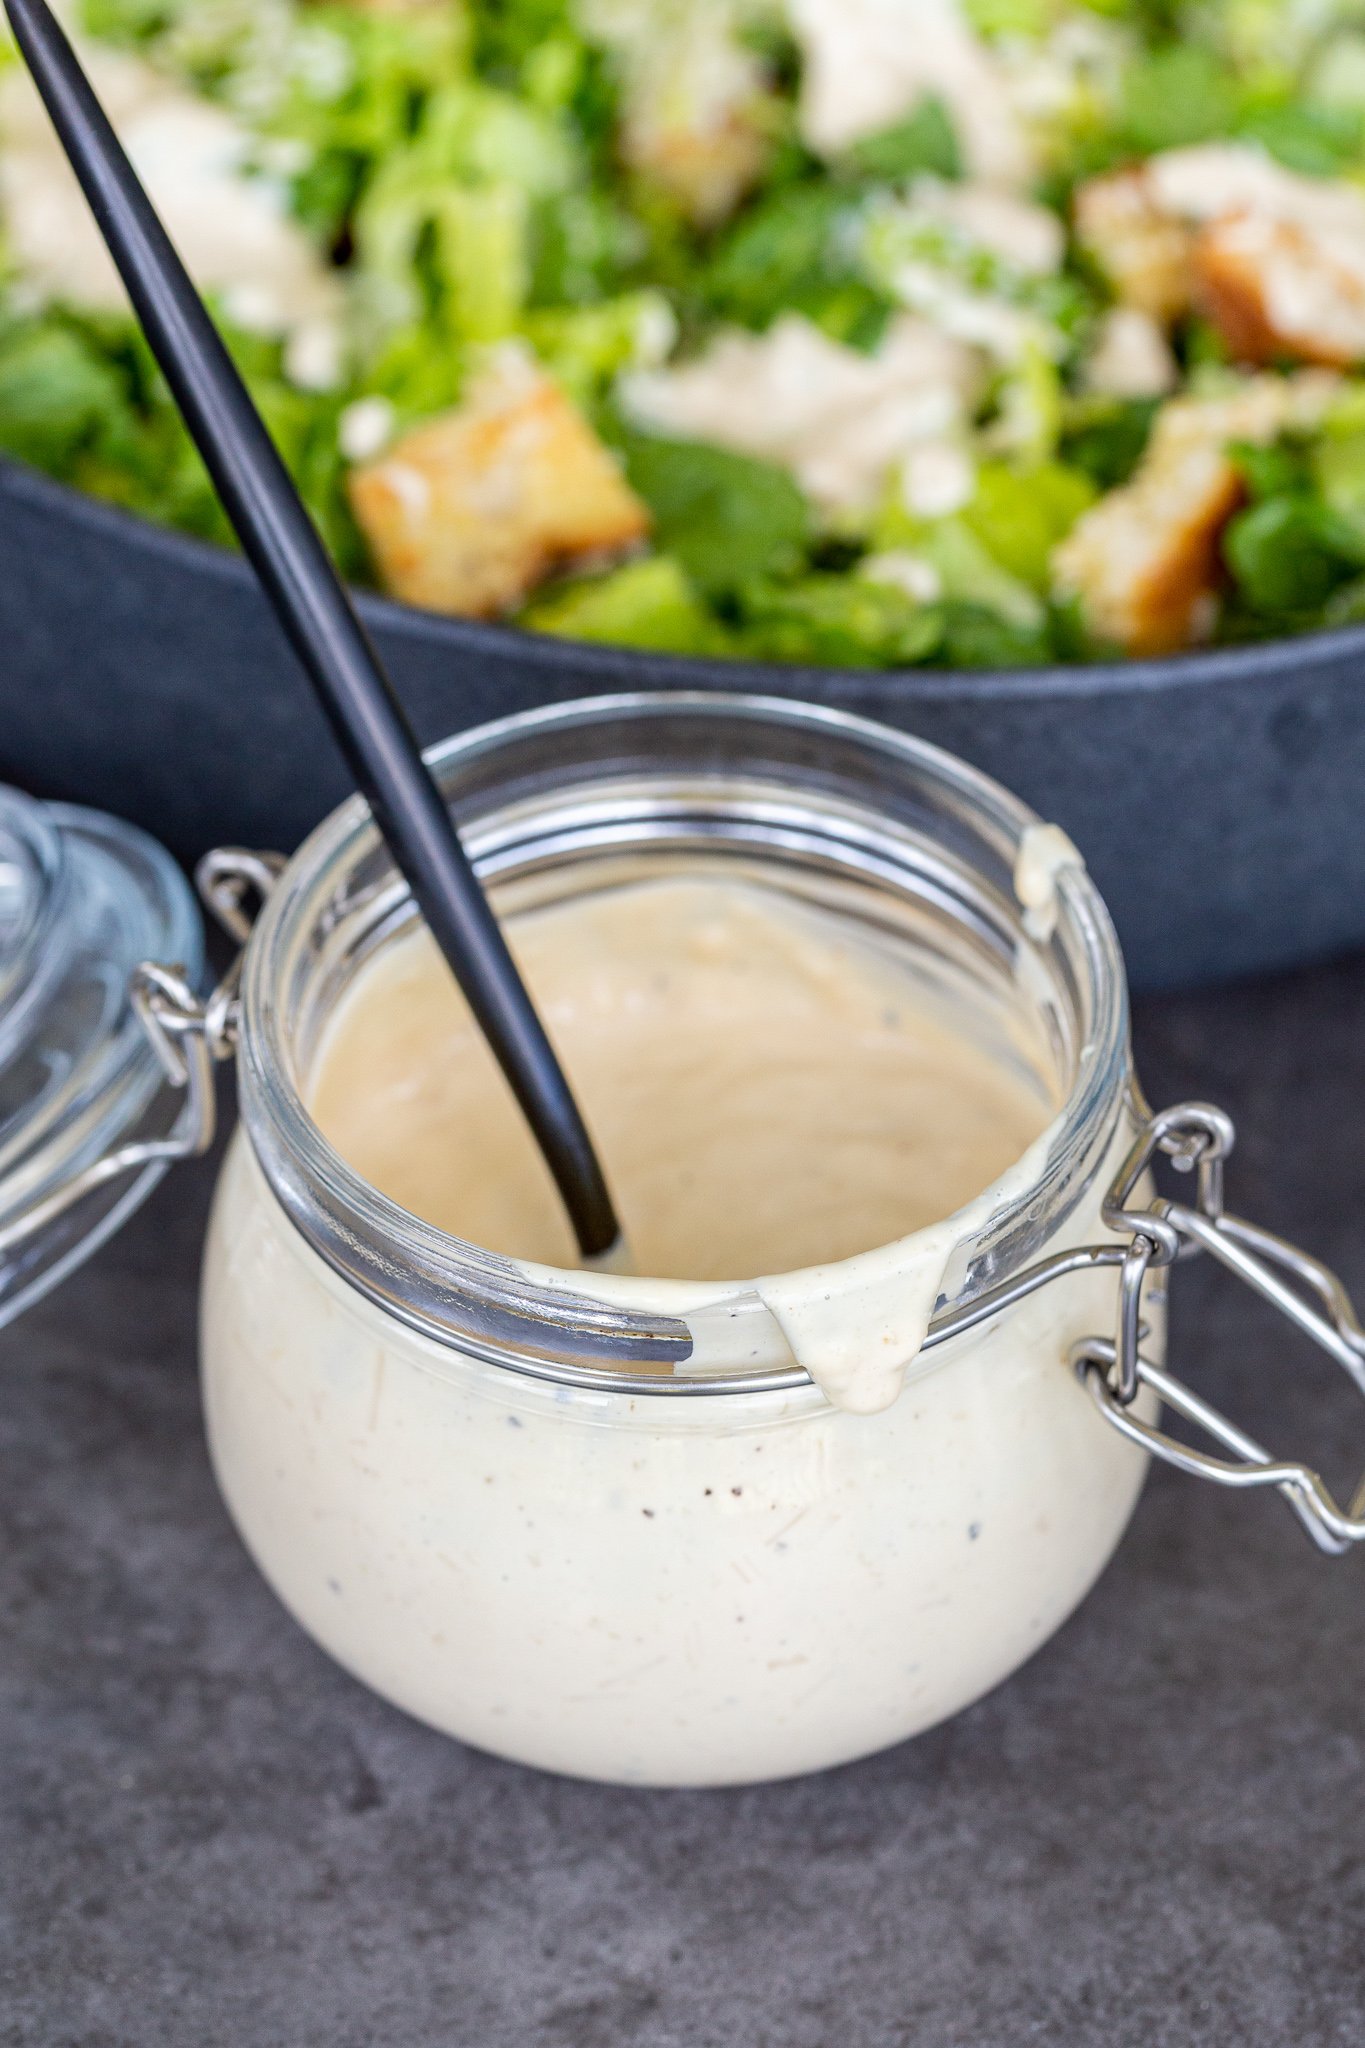 Blender Salad Dressing Recipes